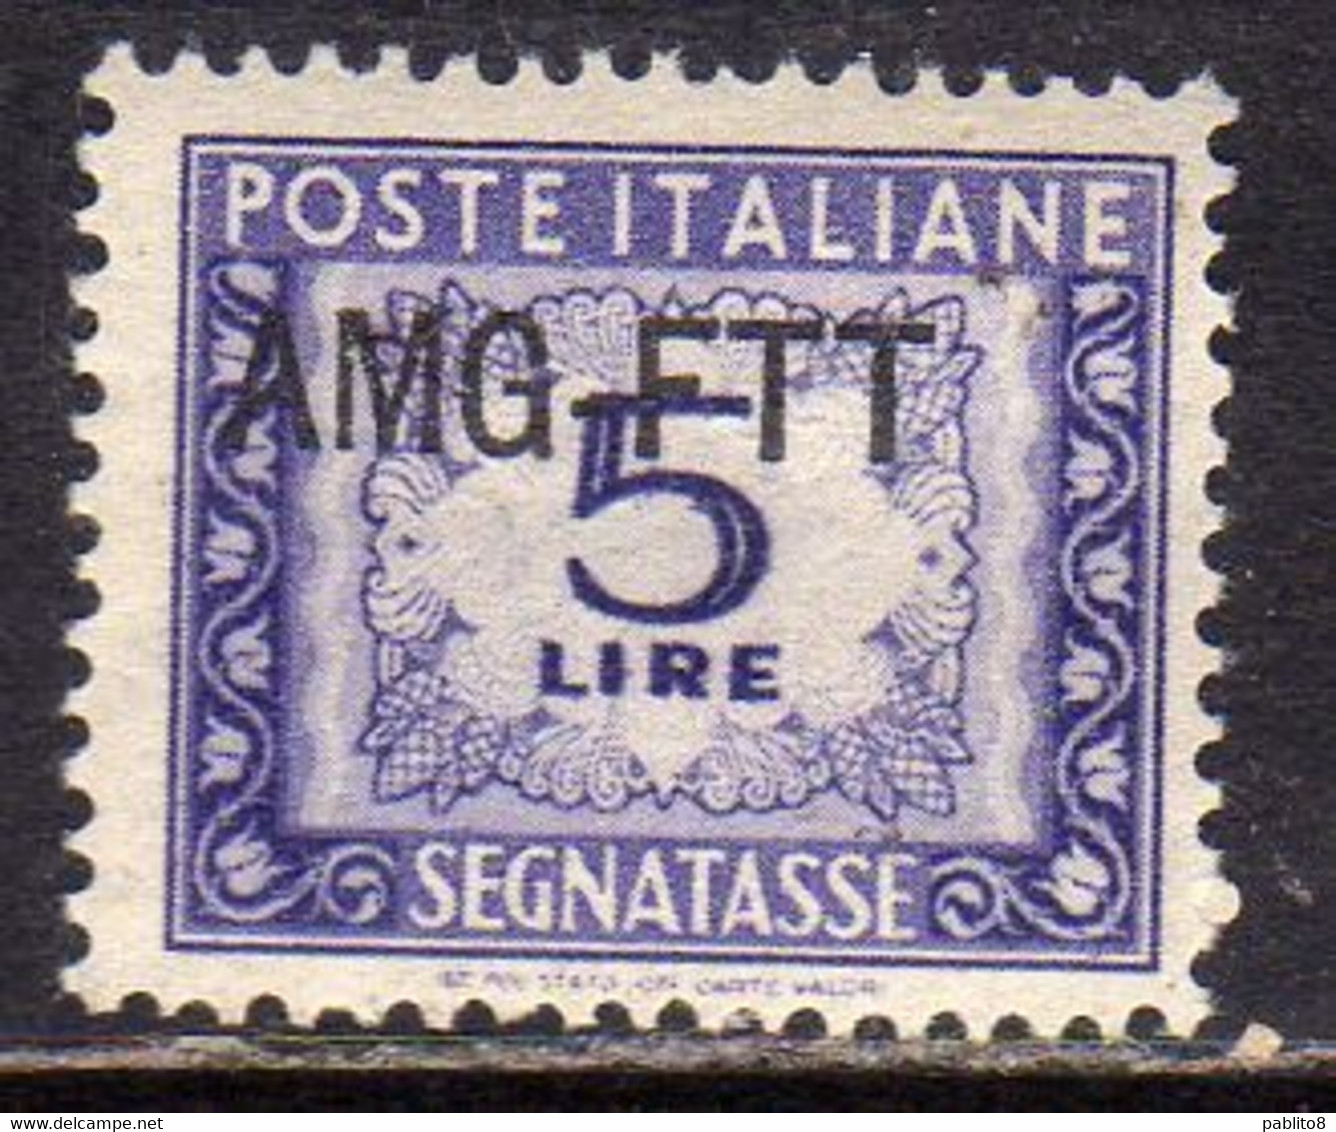 TRIESTE A 1949 1954 VARIETÀ VARIETY AMG-FTT SOPRASTAMPATO D'ITALIA ITALY SEGNATASSE POSTAGE DUE TAXES TASSE LIRE 5 MNH - Portomarken